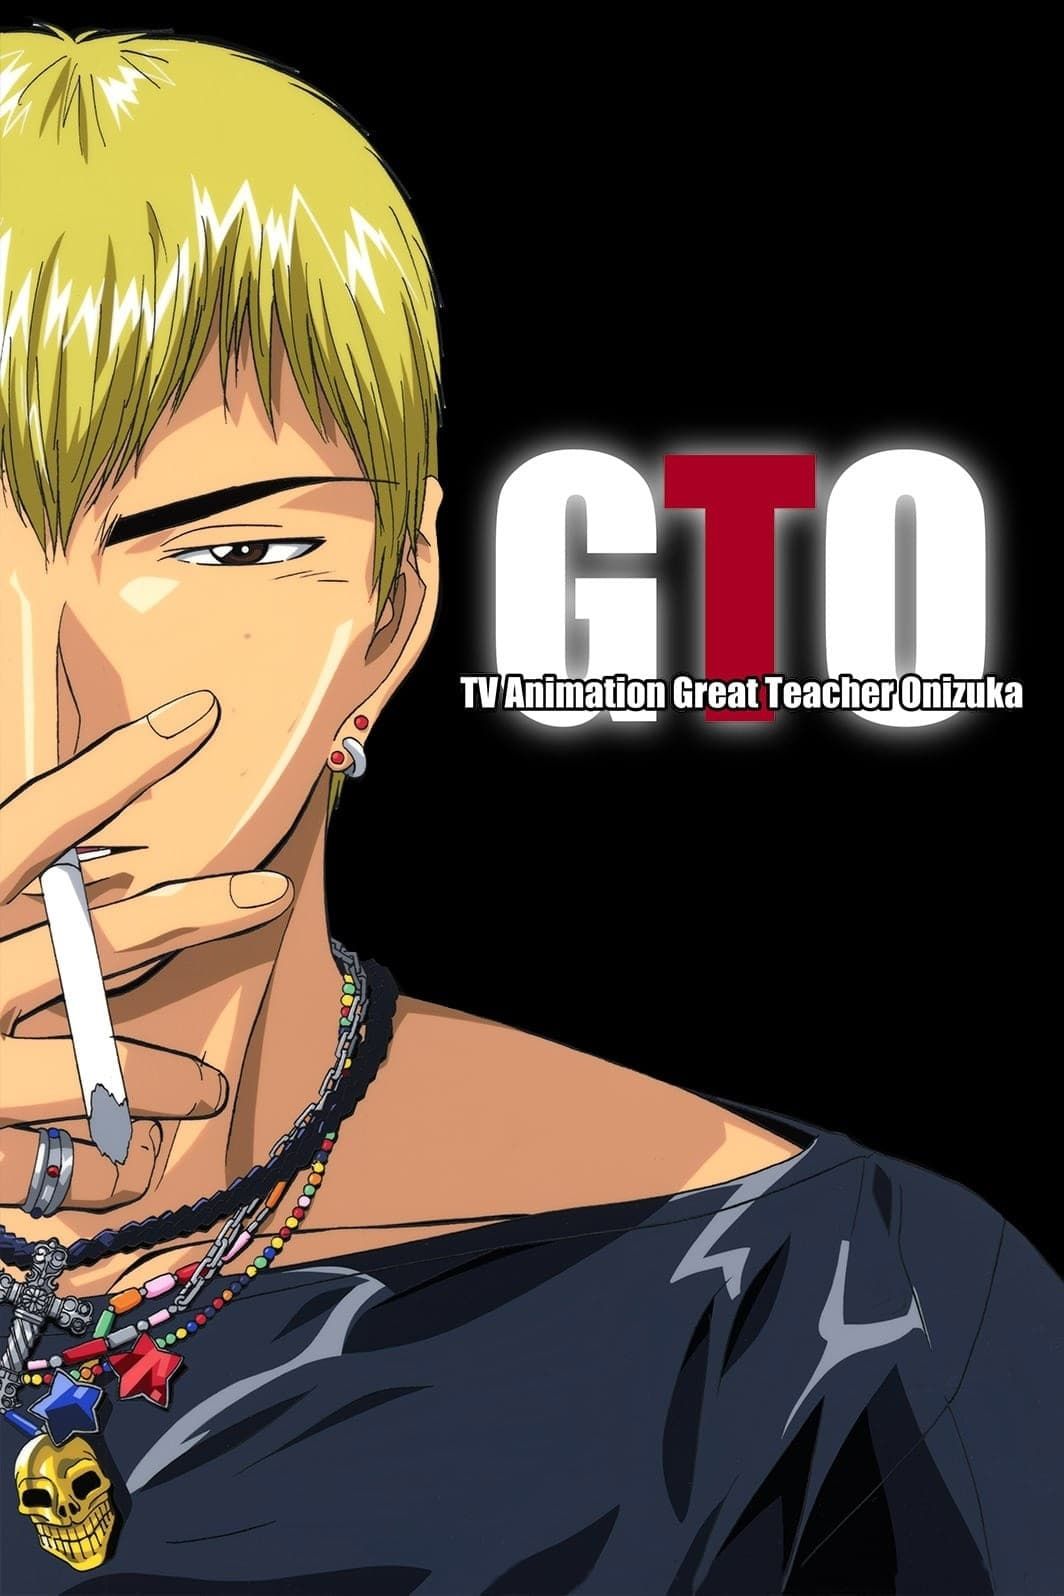 Onizuka smoking a cigarette on the poster for Great Teacher Onizuka